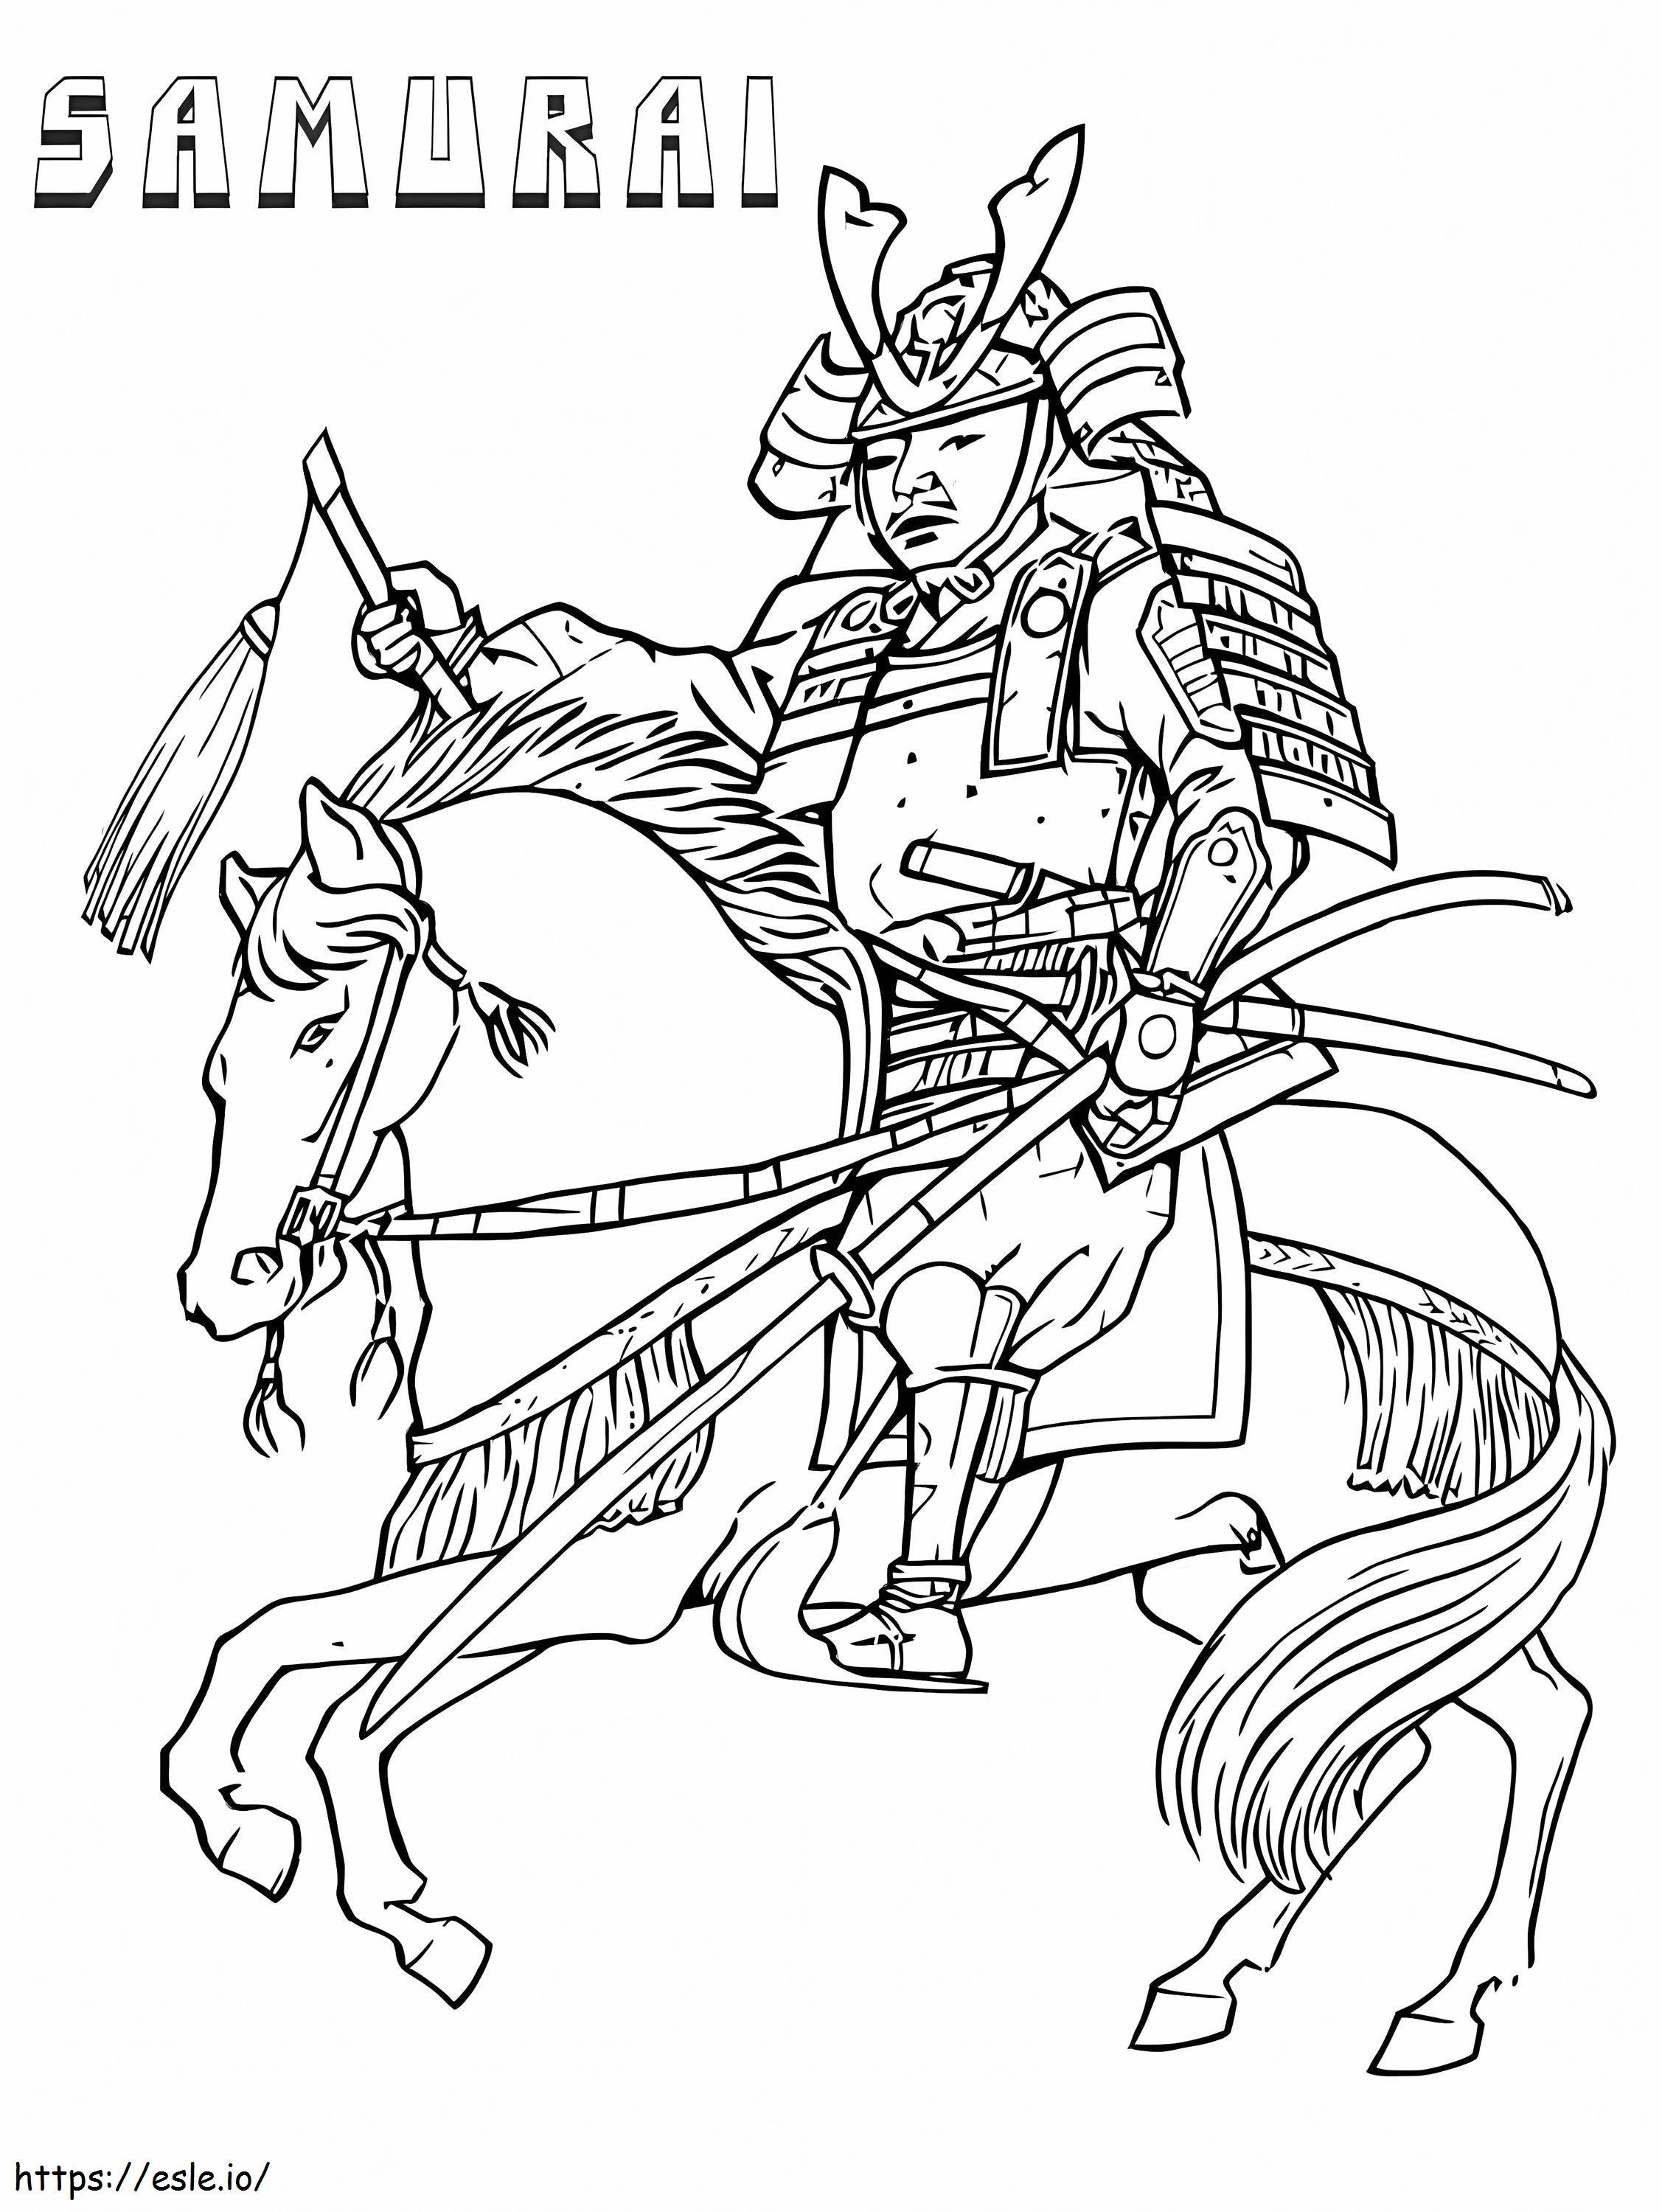 Samurai On Horseback coloring page